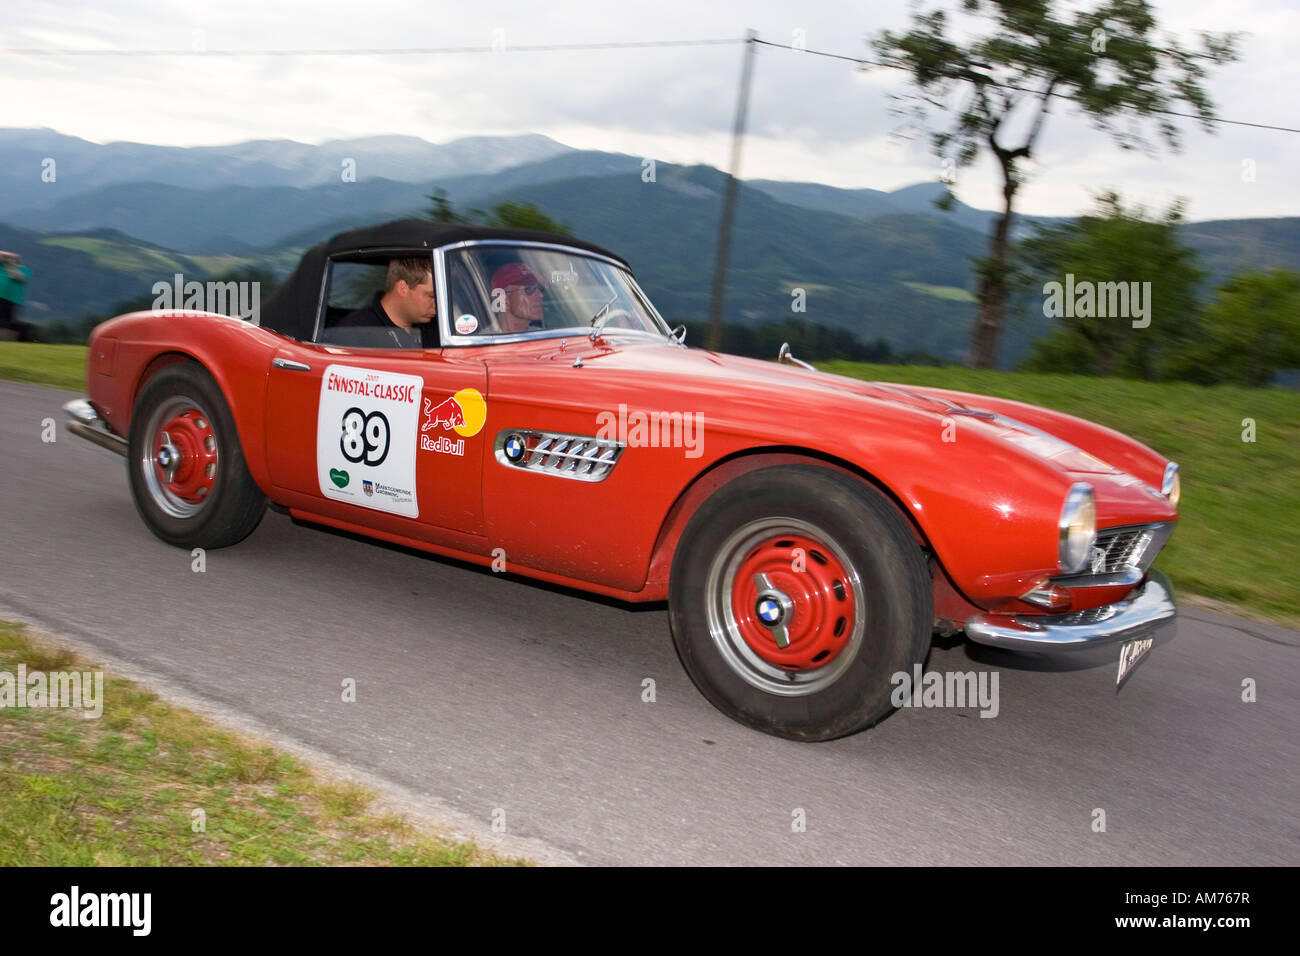 BMW 507, vintage car, Ennstal-Classic 2007, Austria Stock Photo